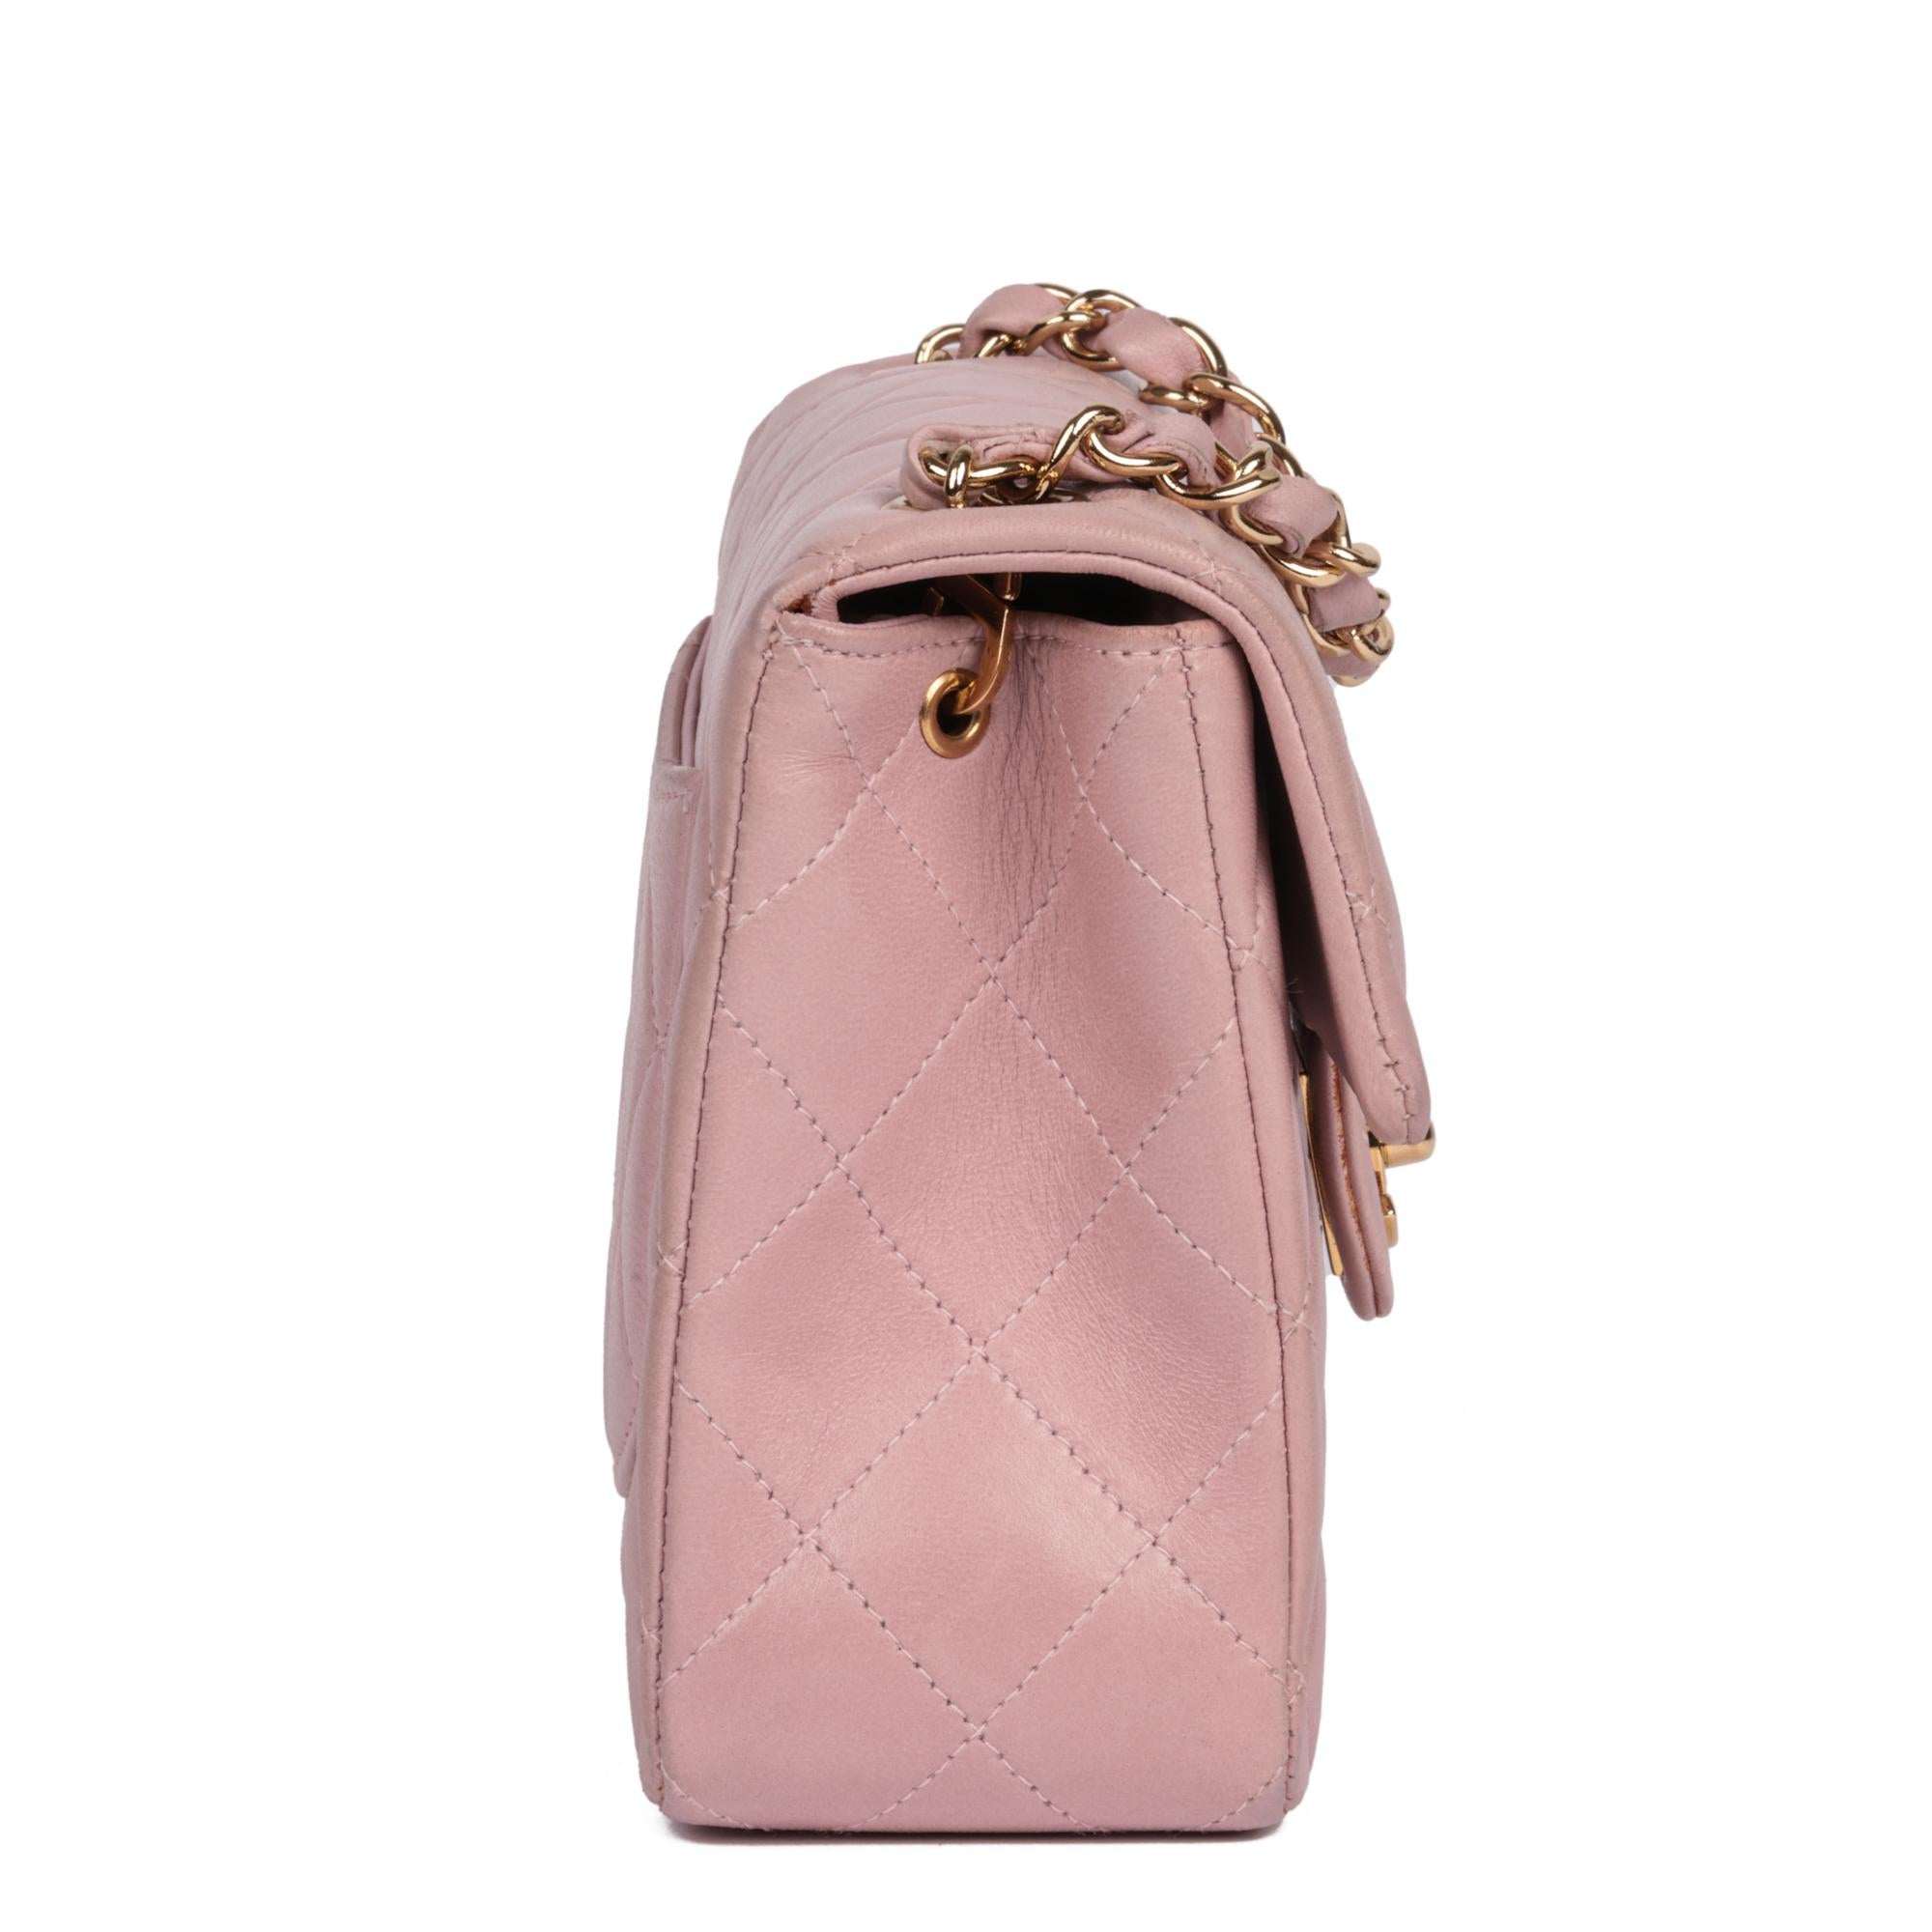 chanel pink square bag